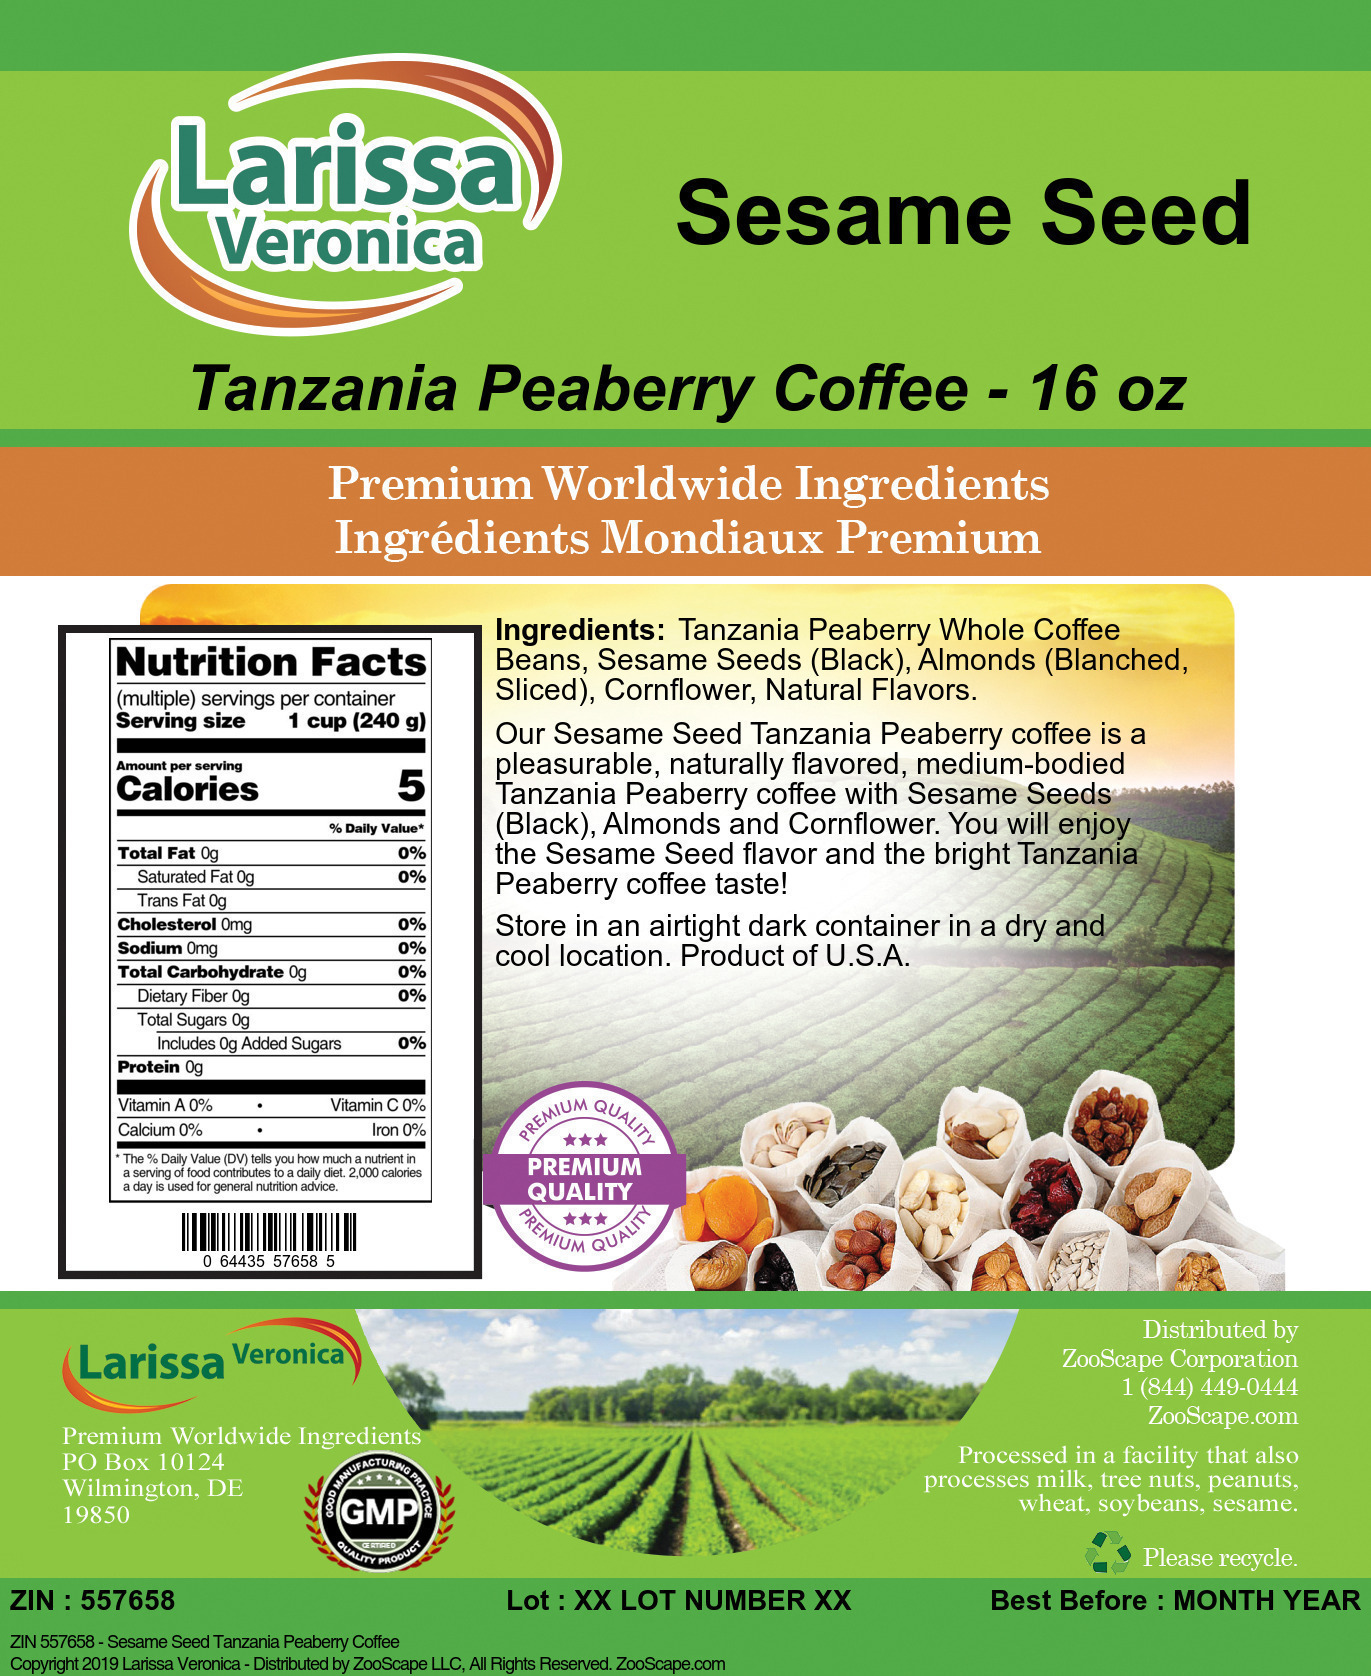 Sesame Seed Tanzania Peaberry Coffee - Label